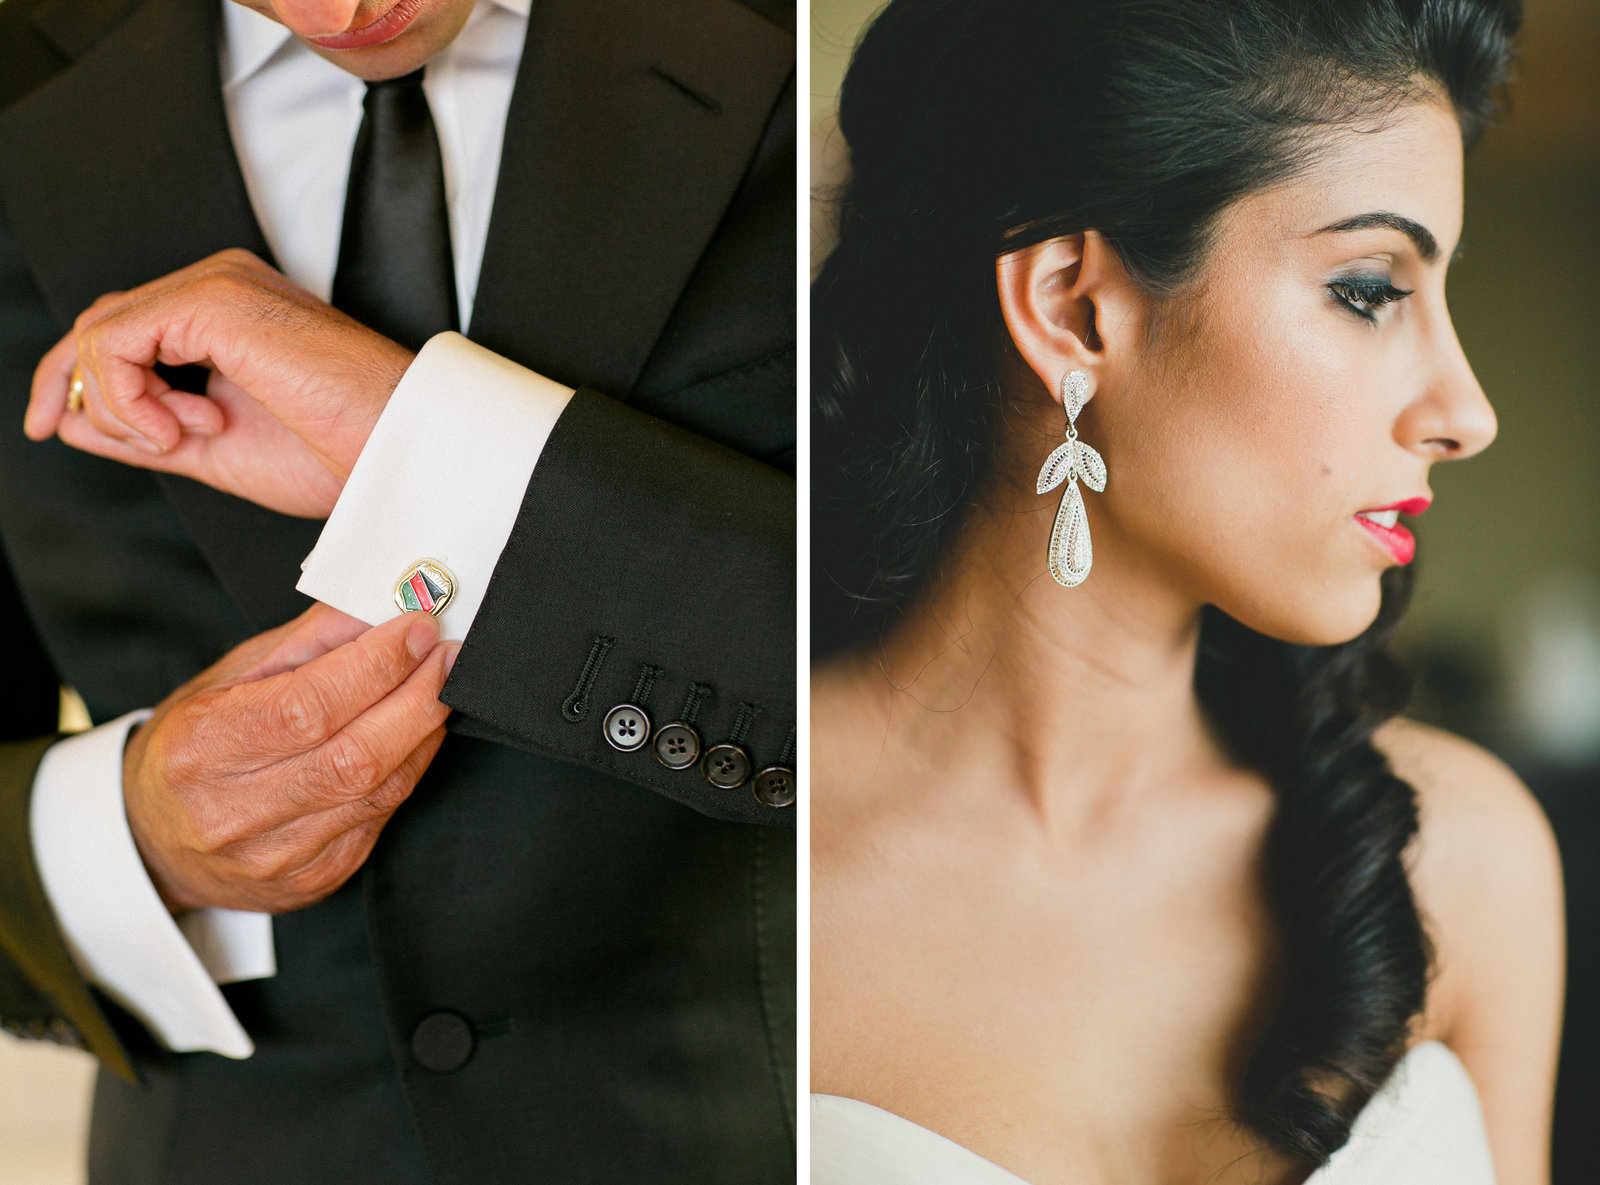 Wedding Earrings and cufflinks